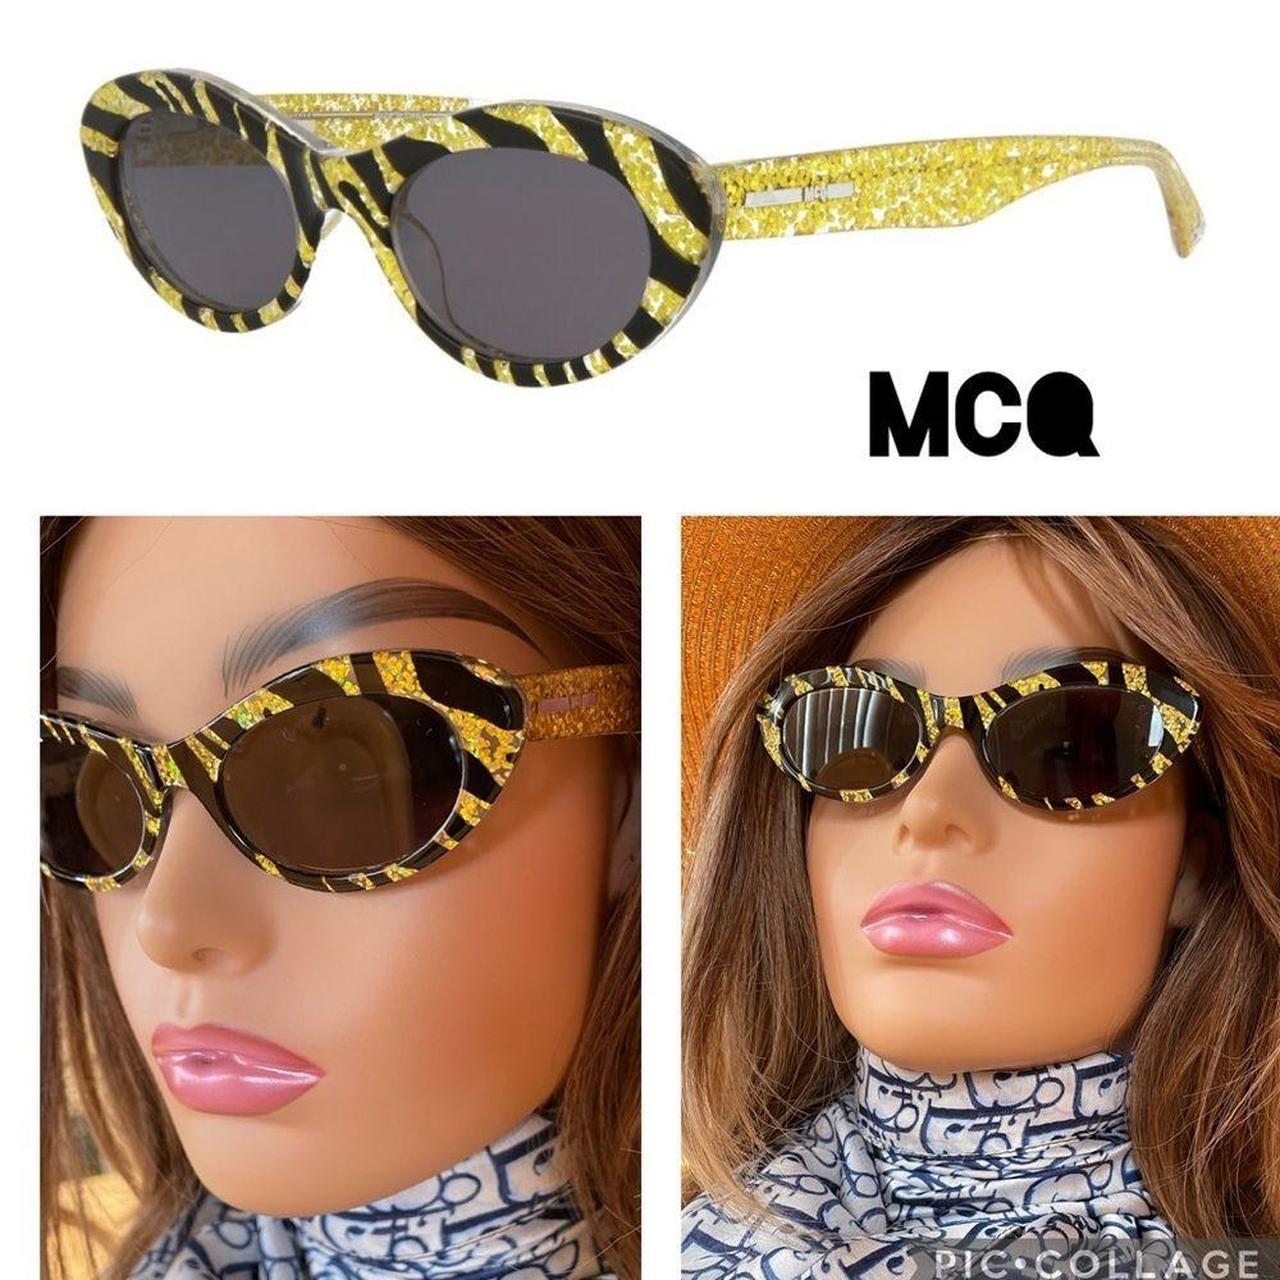 McQ Alexander McQueen Women's Yellow and Gold Sunglasses